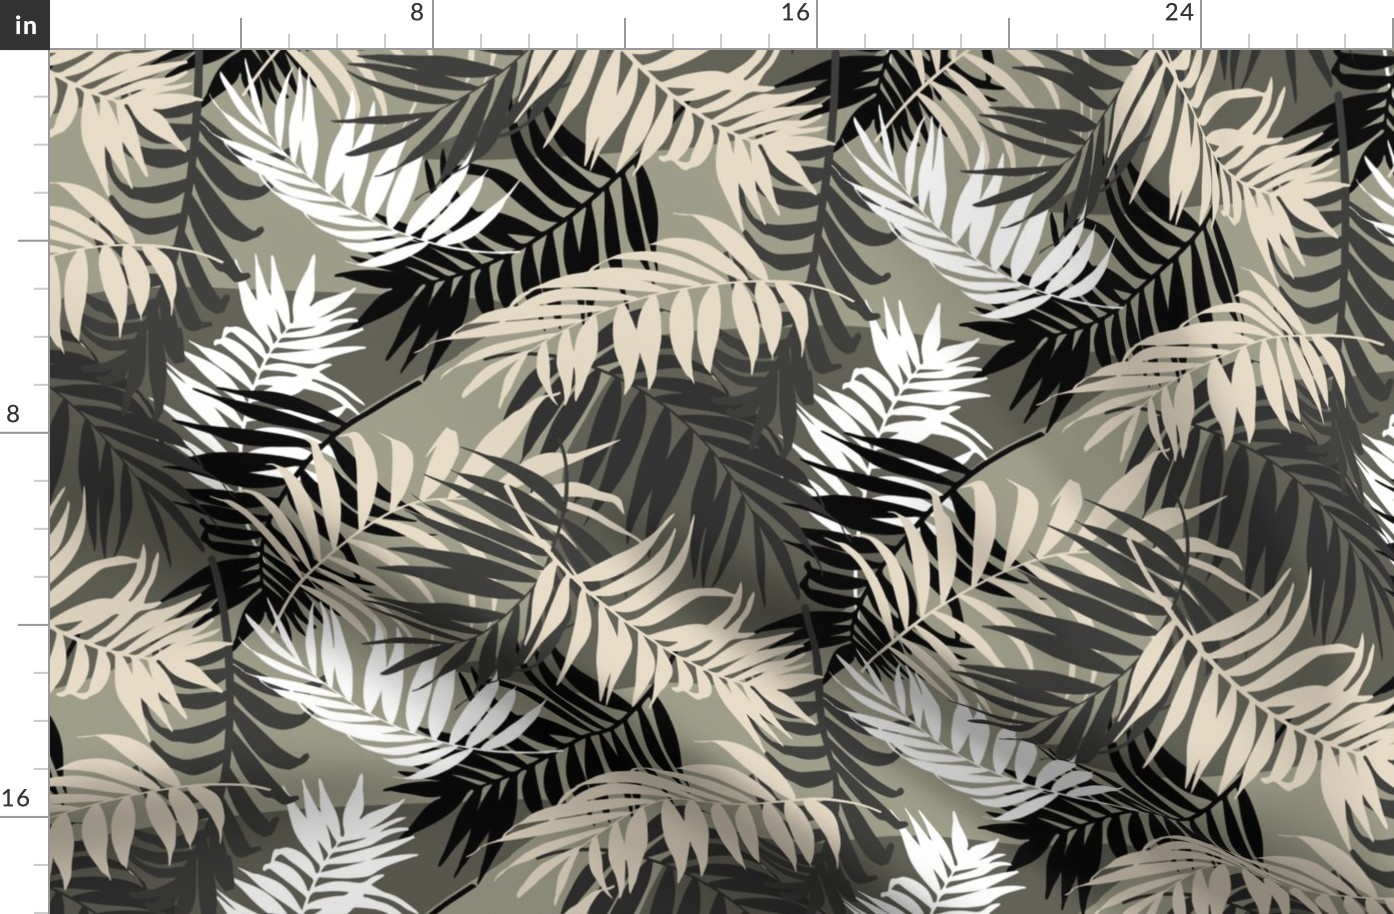 Palm Leaf Tropical - on soft grey green background